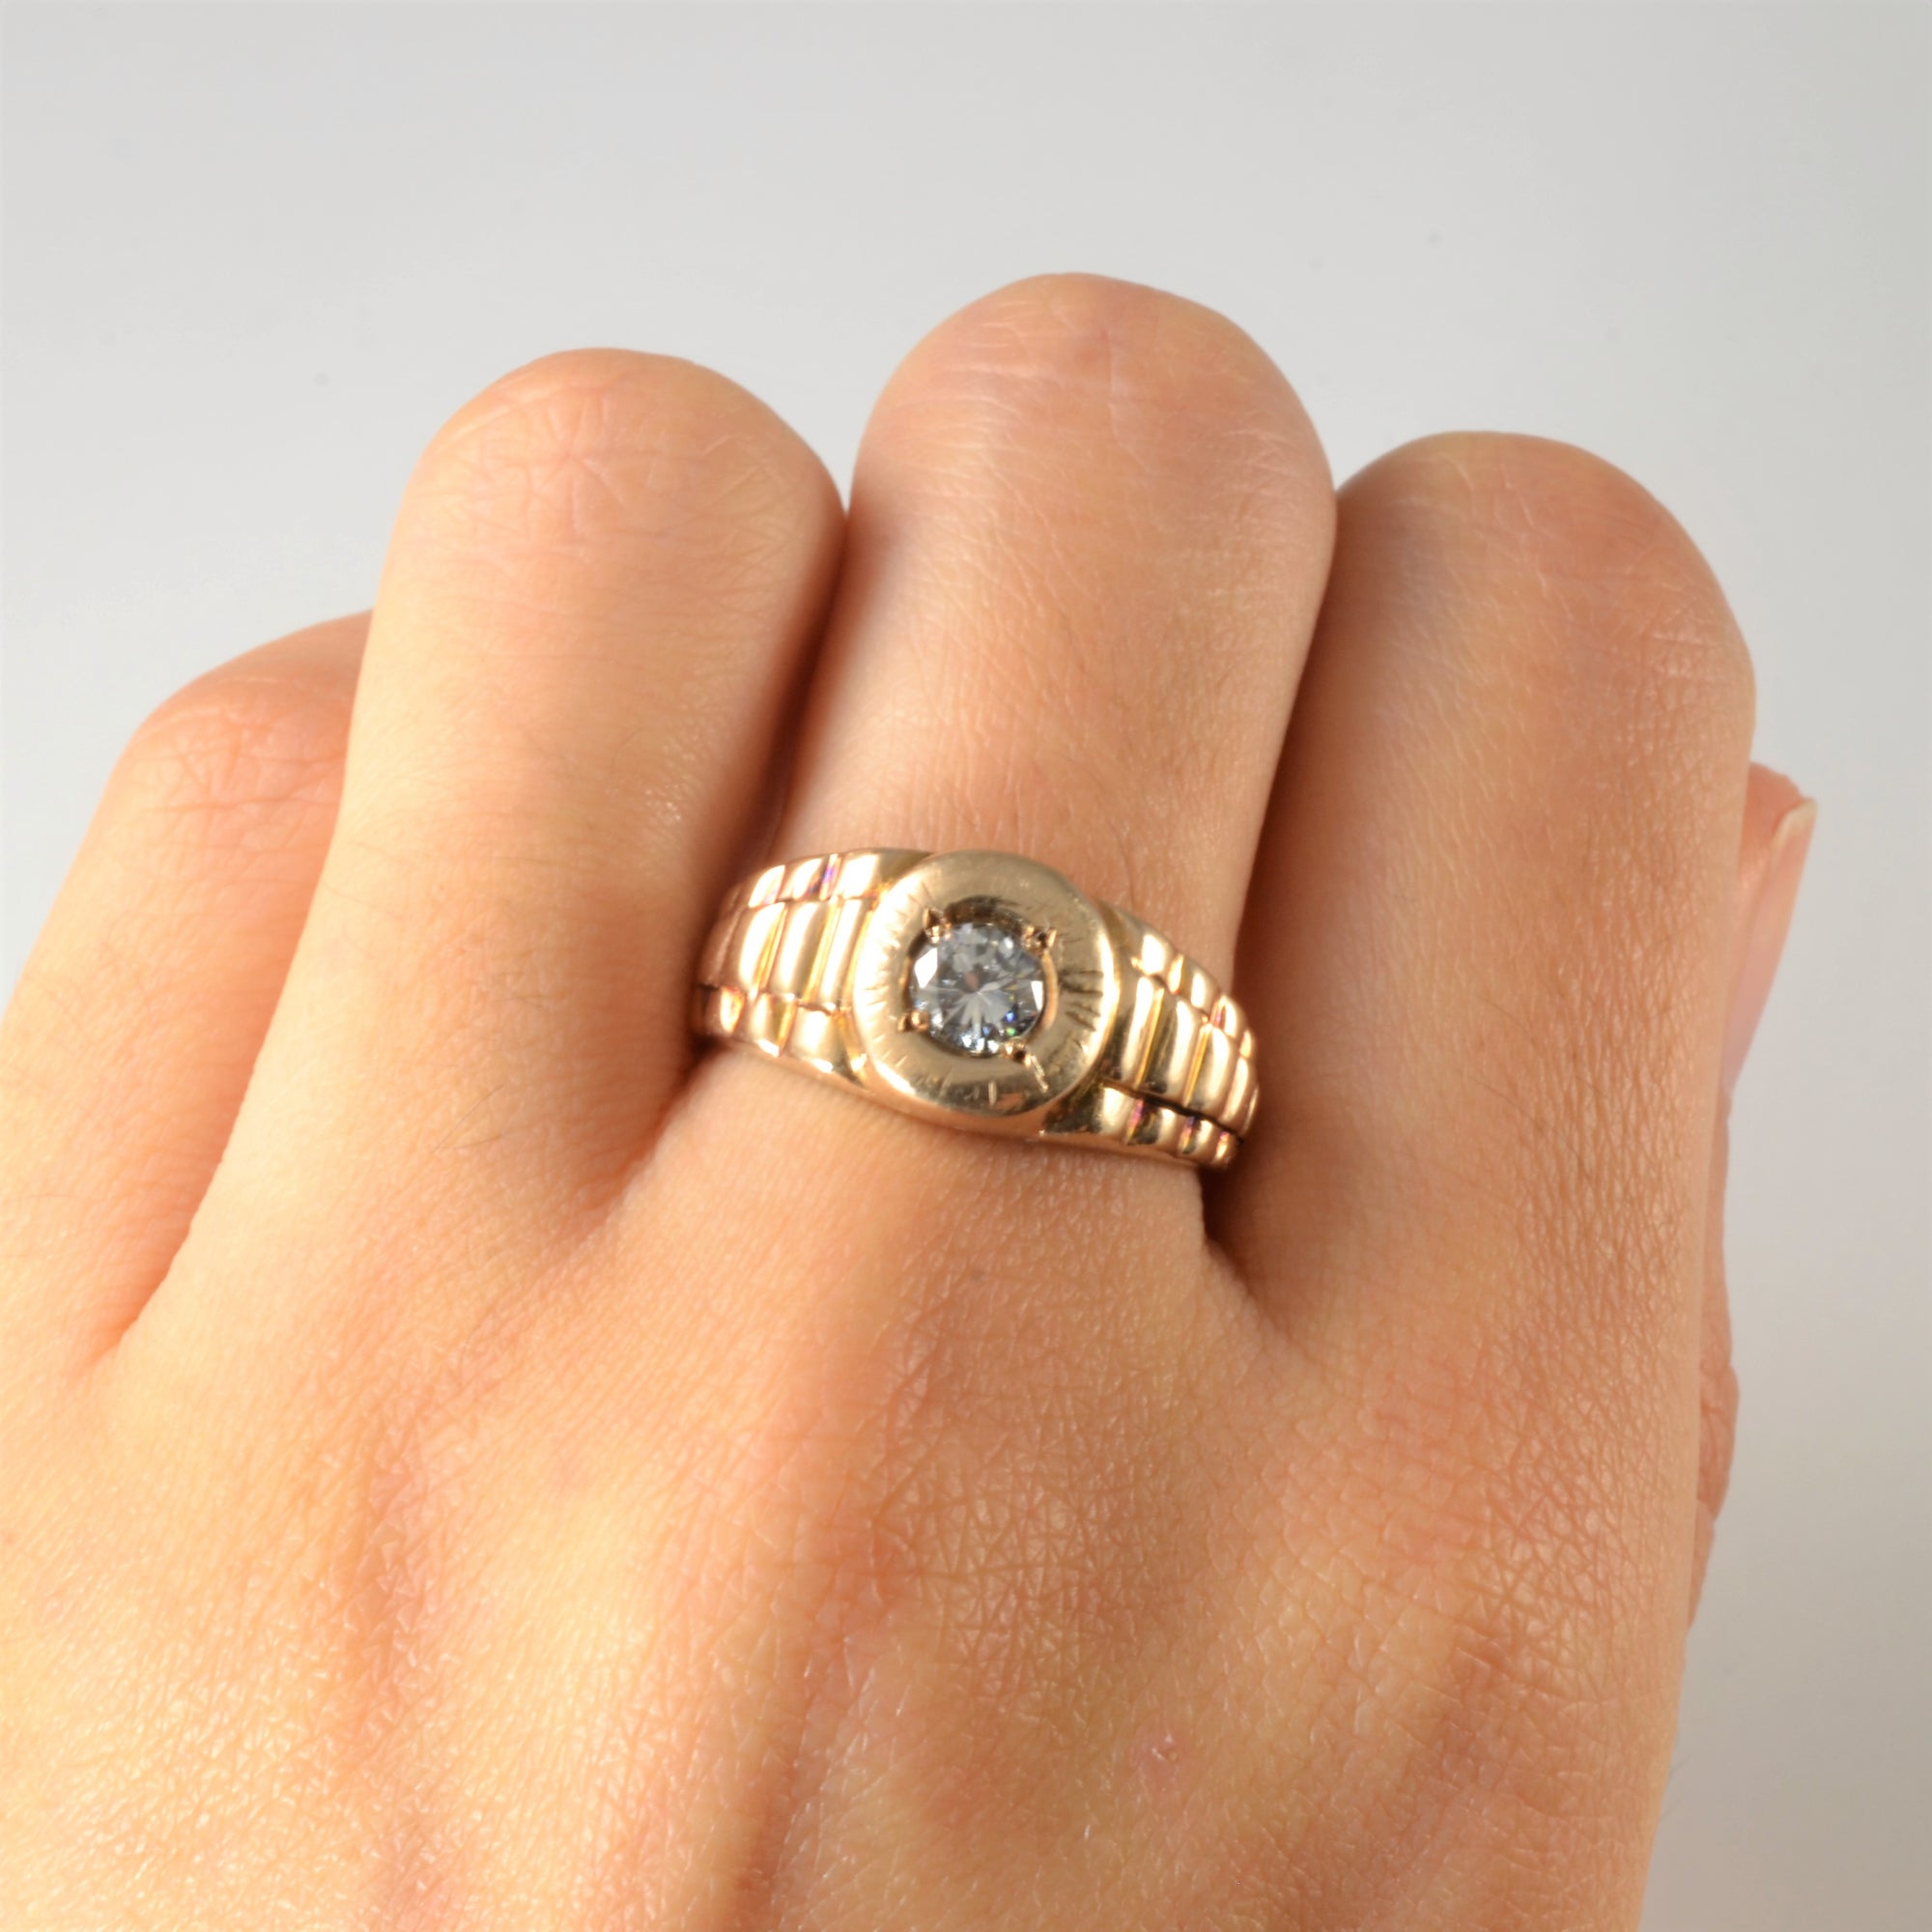 Watch Strap Detailed Diamond Ring | 0.35ct | SZ 7.75 |